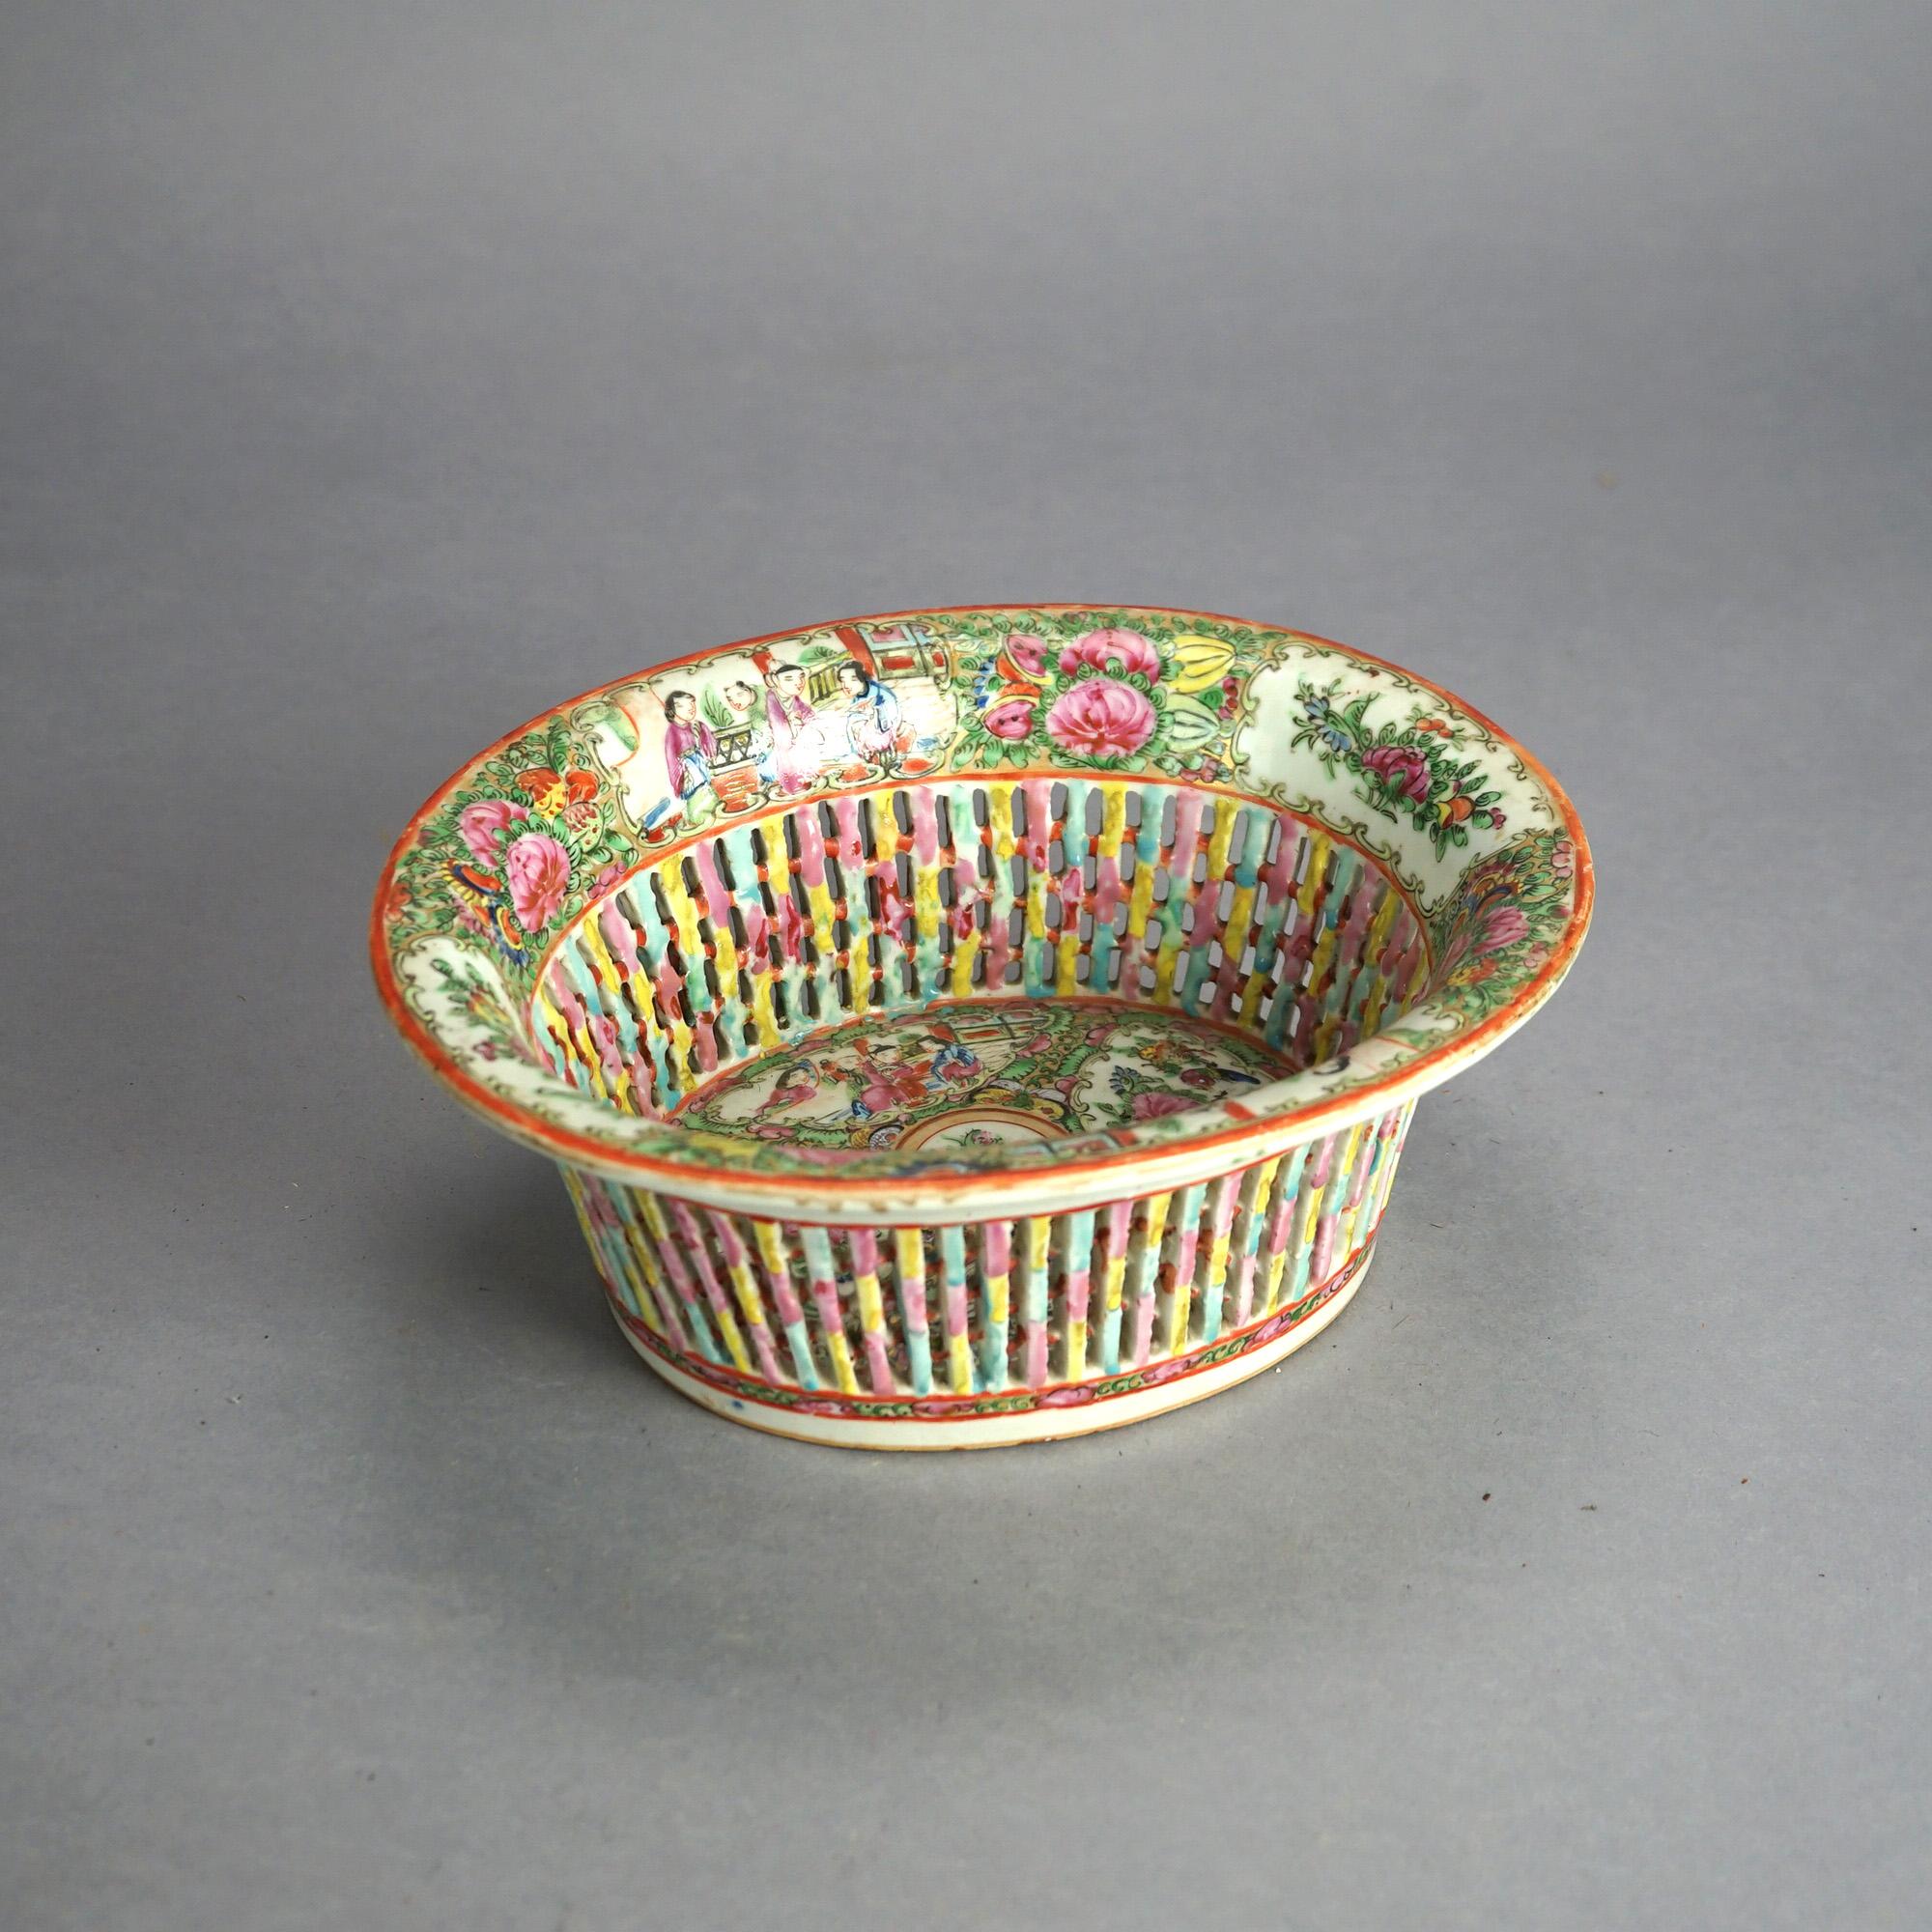 Chinese Antique Rose Medallion Reticulated Porcelain Basket, Garden & Genre Scenes C1900